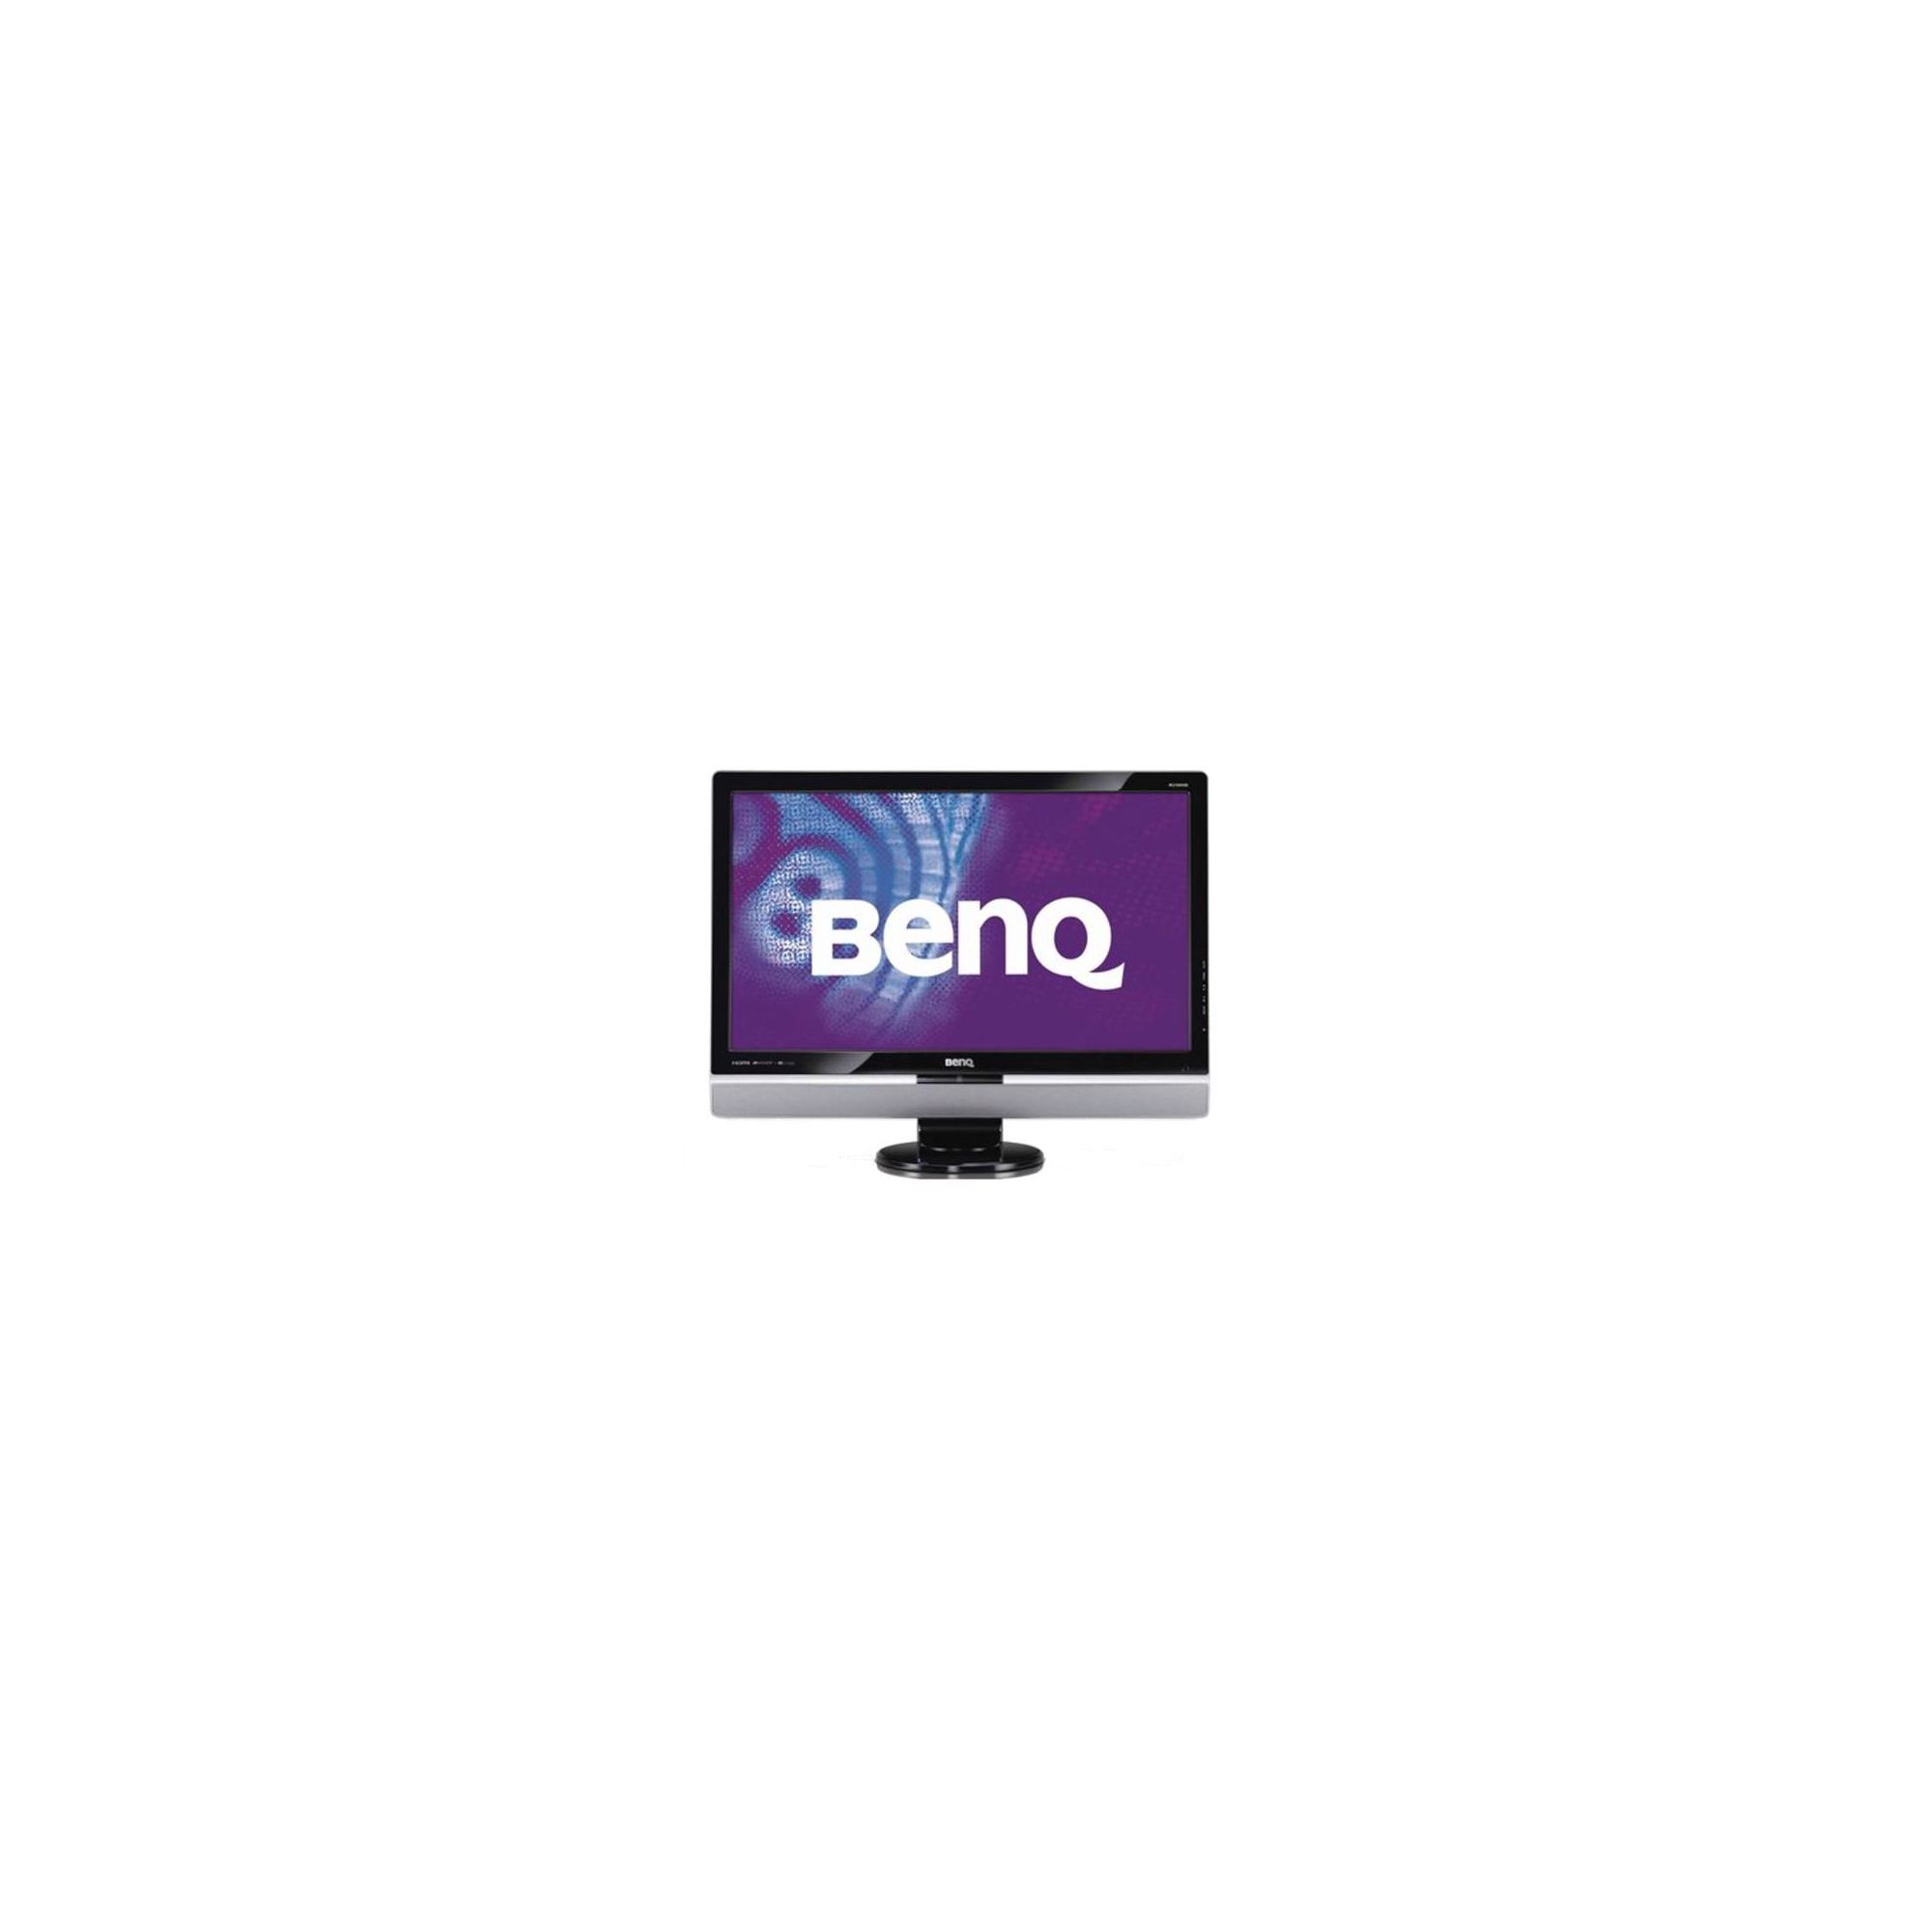 BenQ M2700HD 27'' LCD Monitor at Tesco Direct